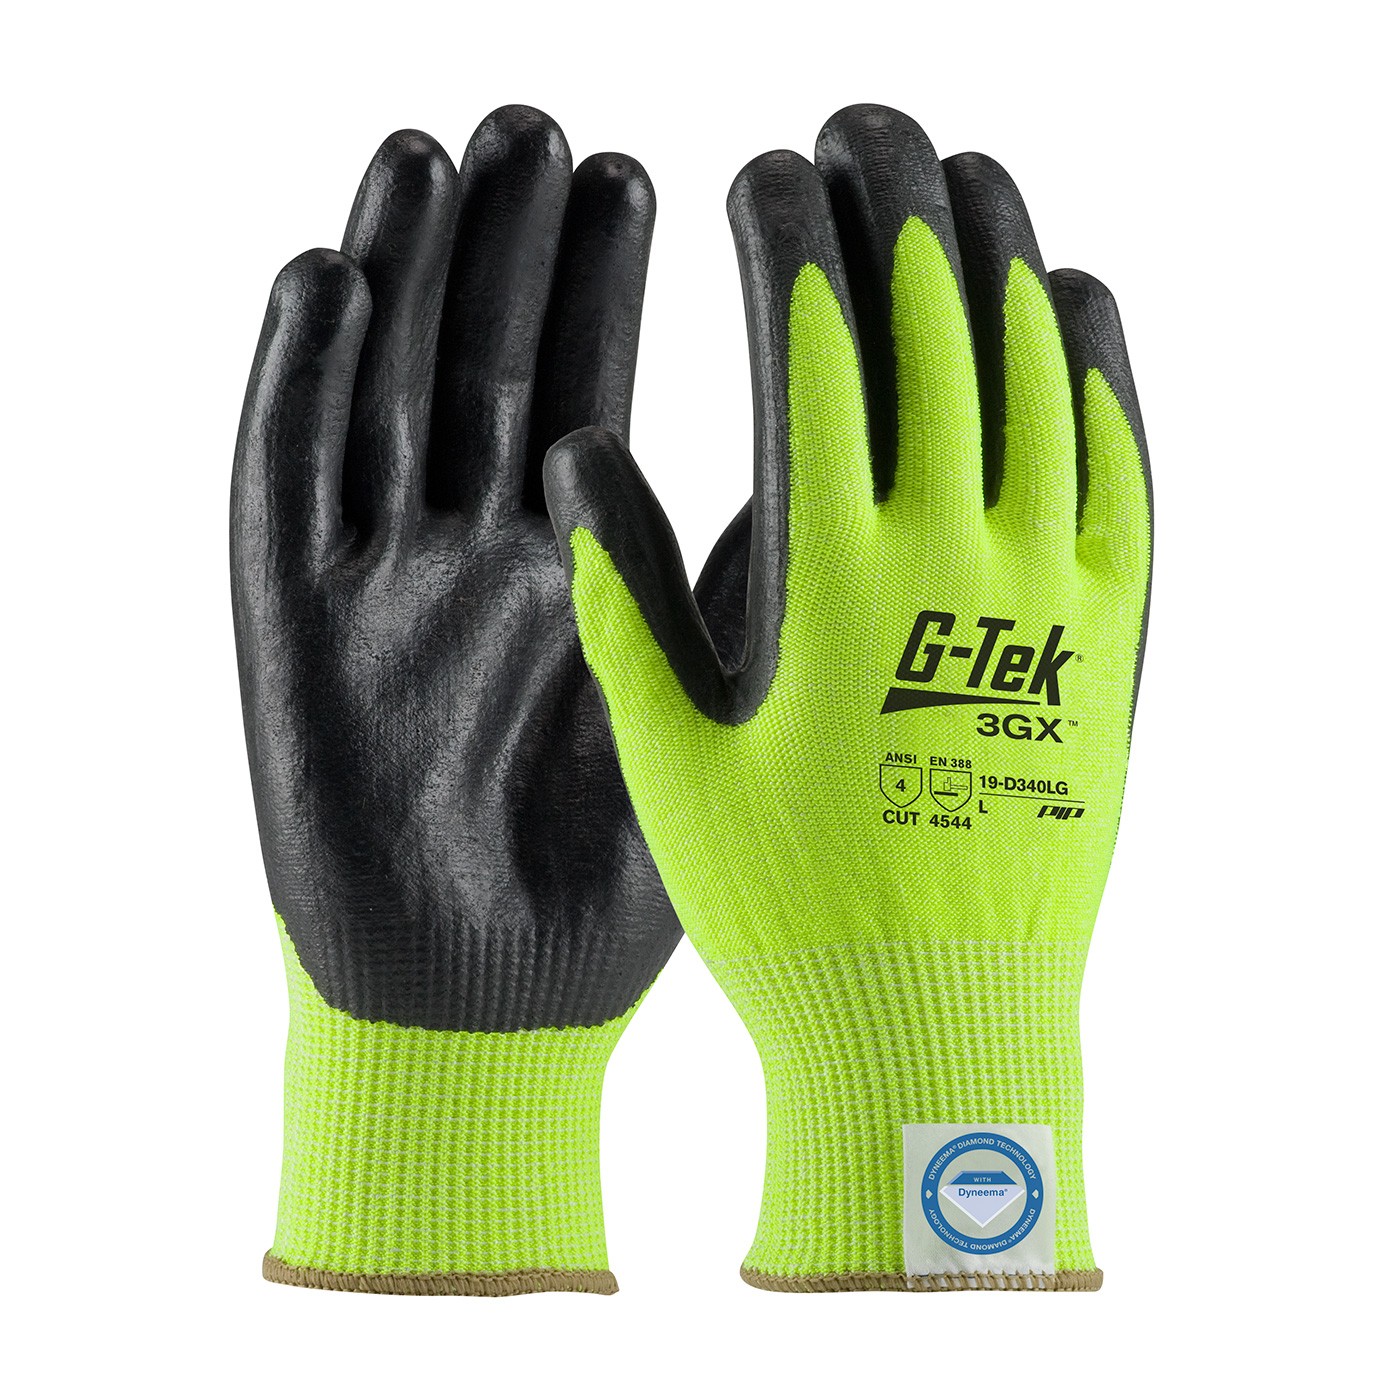 G-Tek® 3GX® Seamless Knit Dyneema® Diamond Blended Glove with Nitrile Coated Foam Grip on Palm & Fingers  (#19-D340LG)